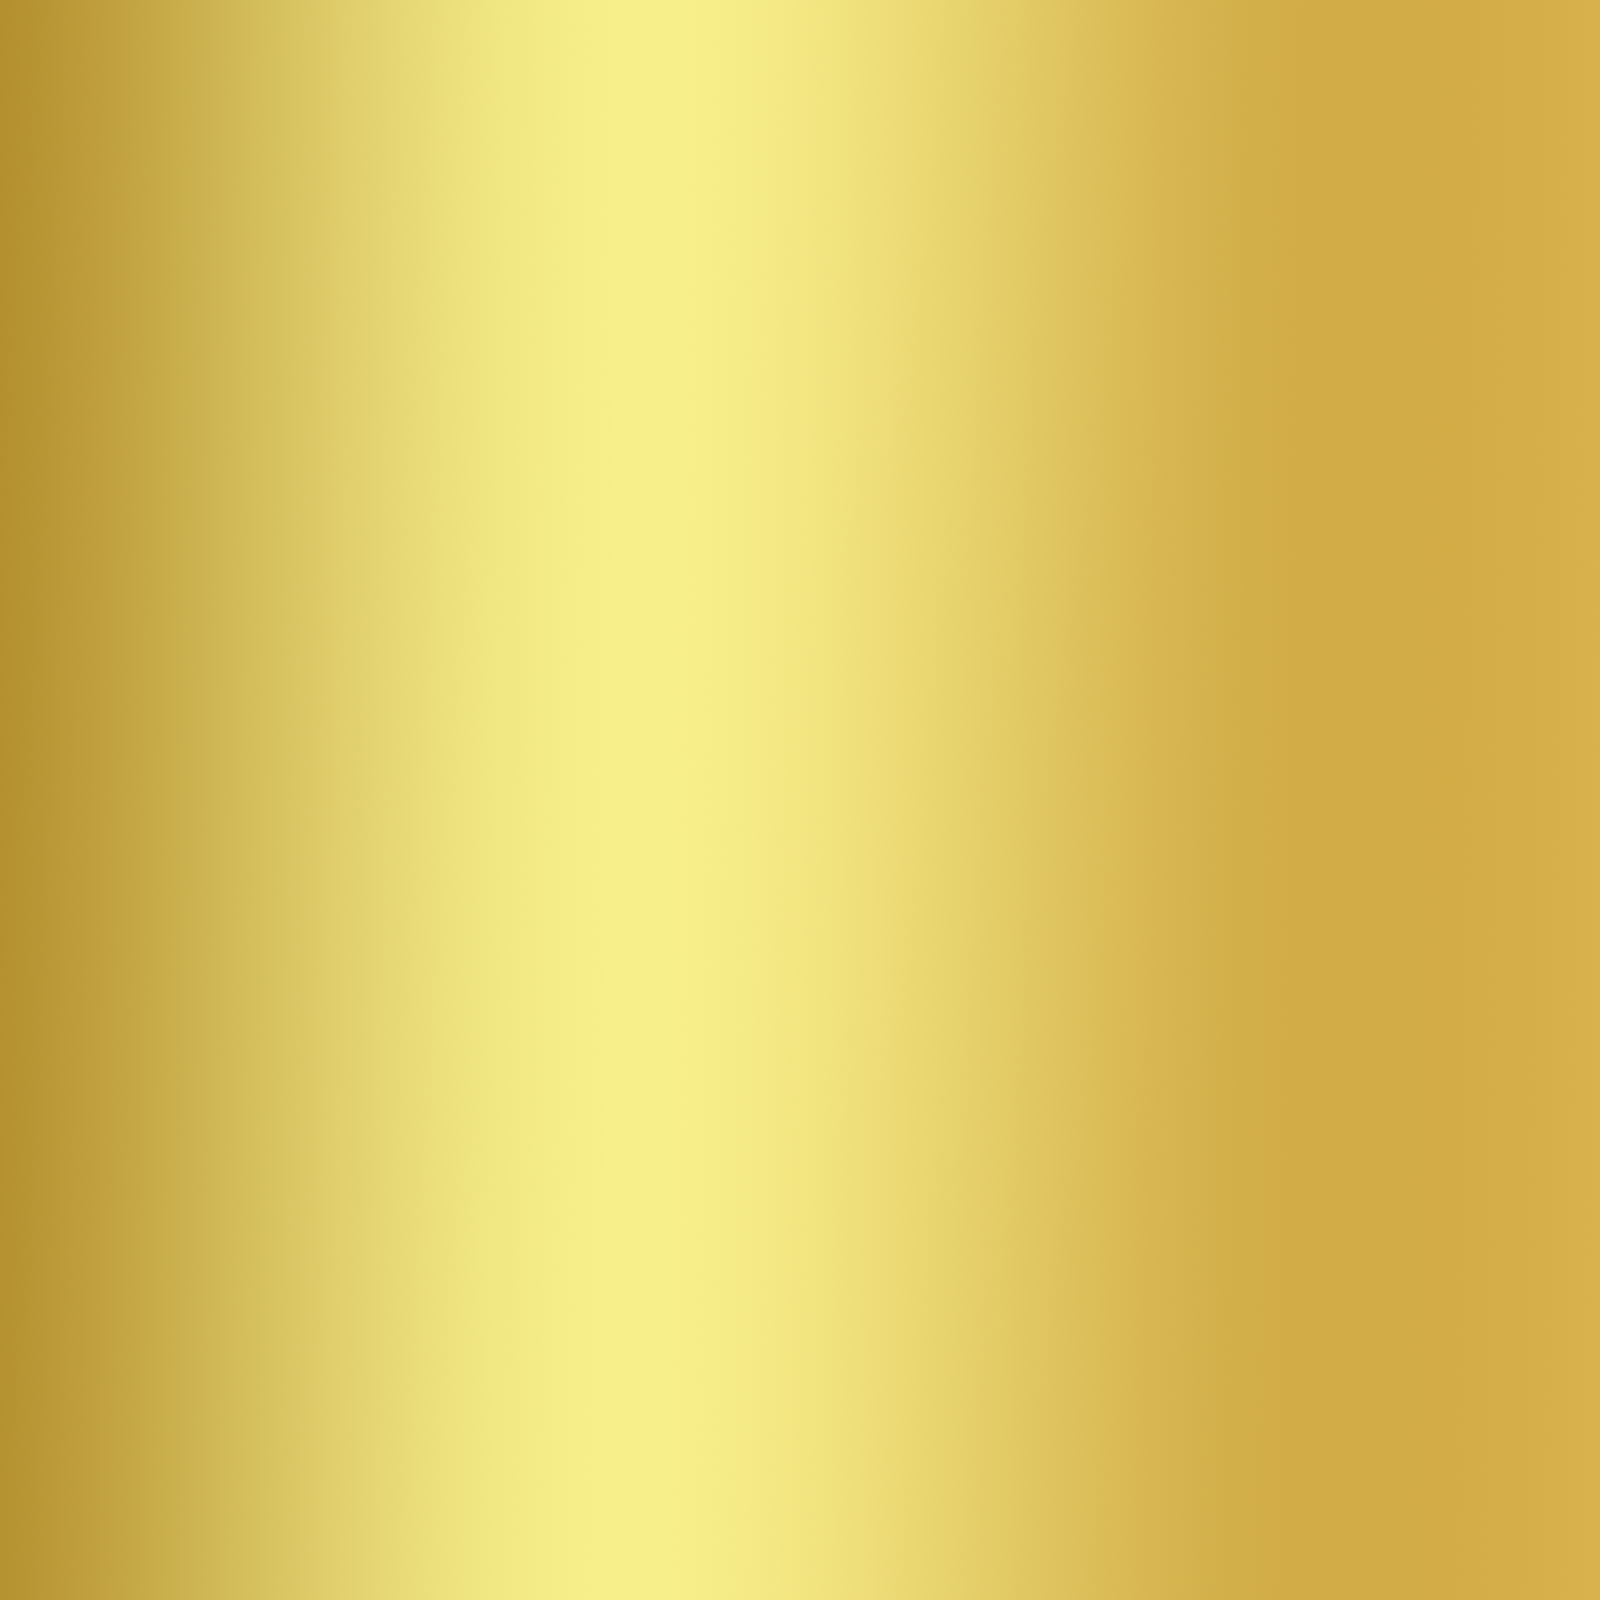 Gold Metallic Gradient Background